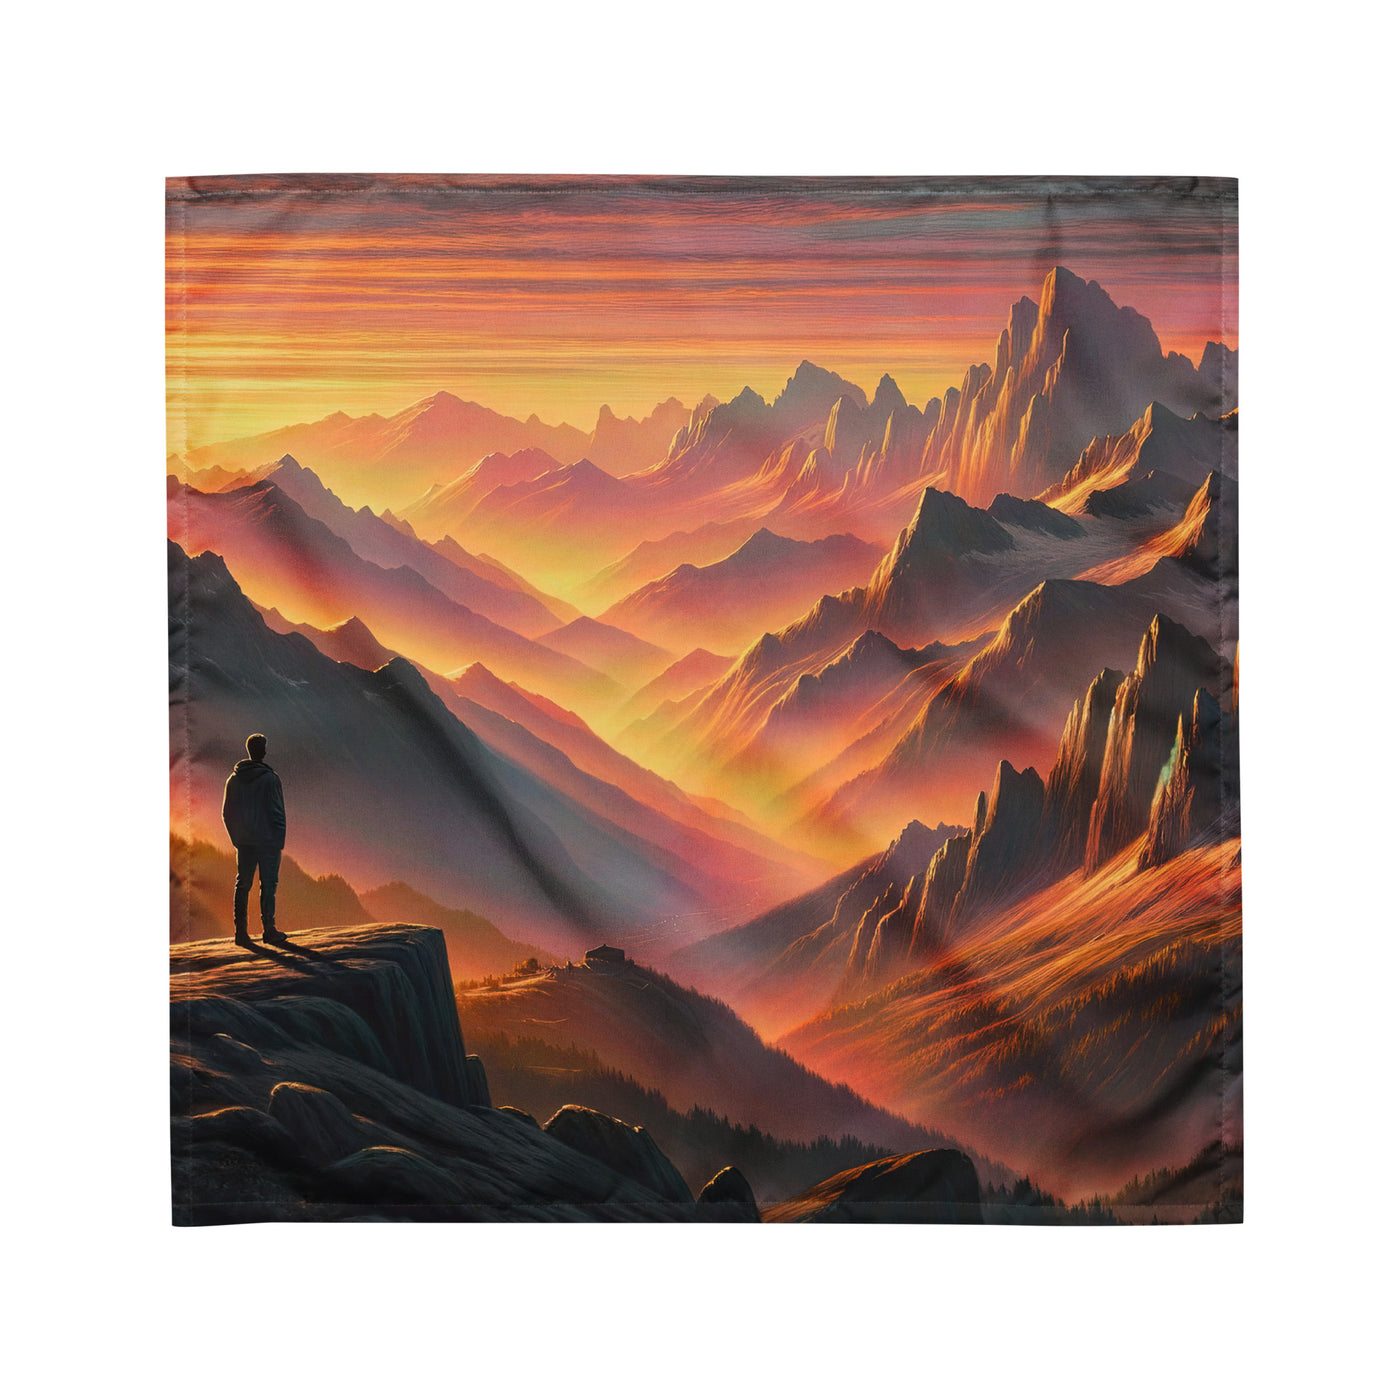 Ölgemälde der Alpen in der goldenen Stunde mit Wanderer, Orange-Rosa Bergpanorama - Bandana (All-Over Print) wandern xxx yyy zzz M